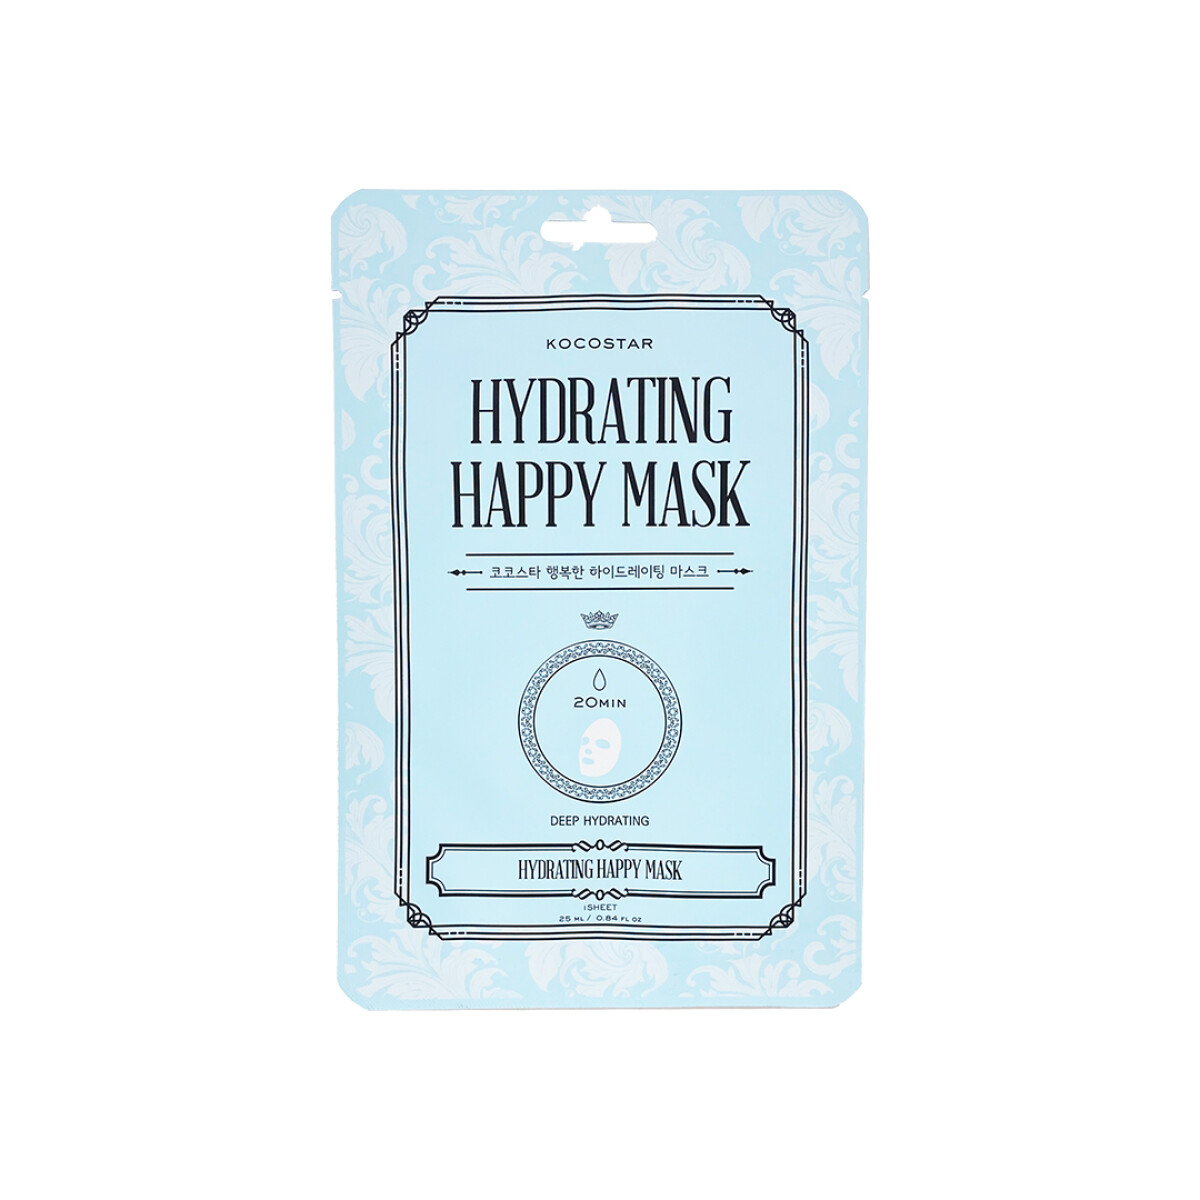 HYDRATING HAPPY MASK - Mascarilla facial hidratante 